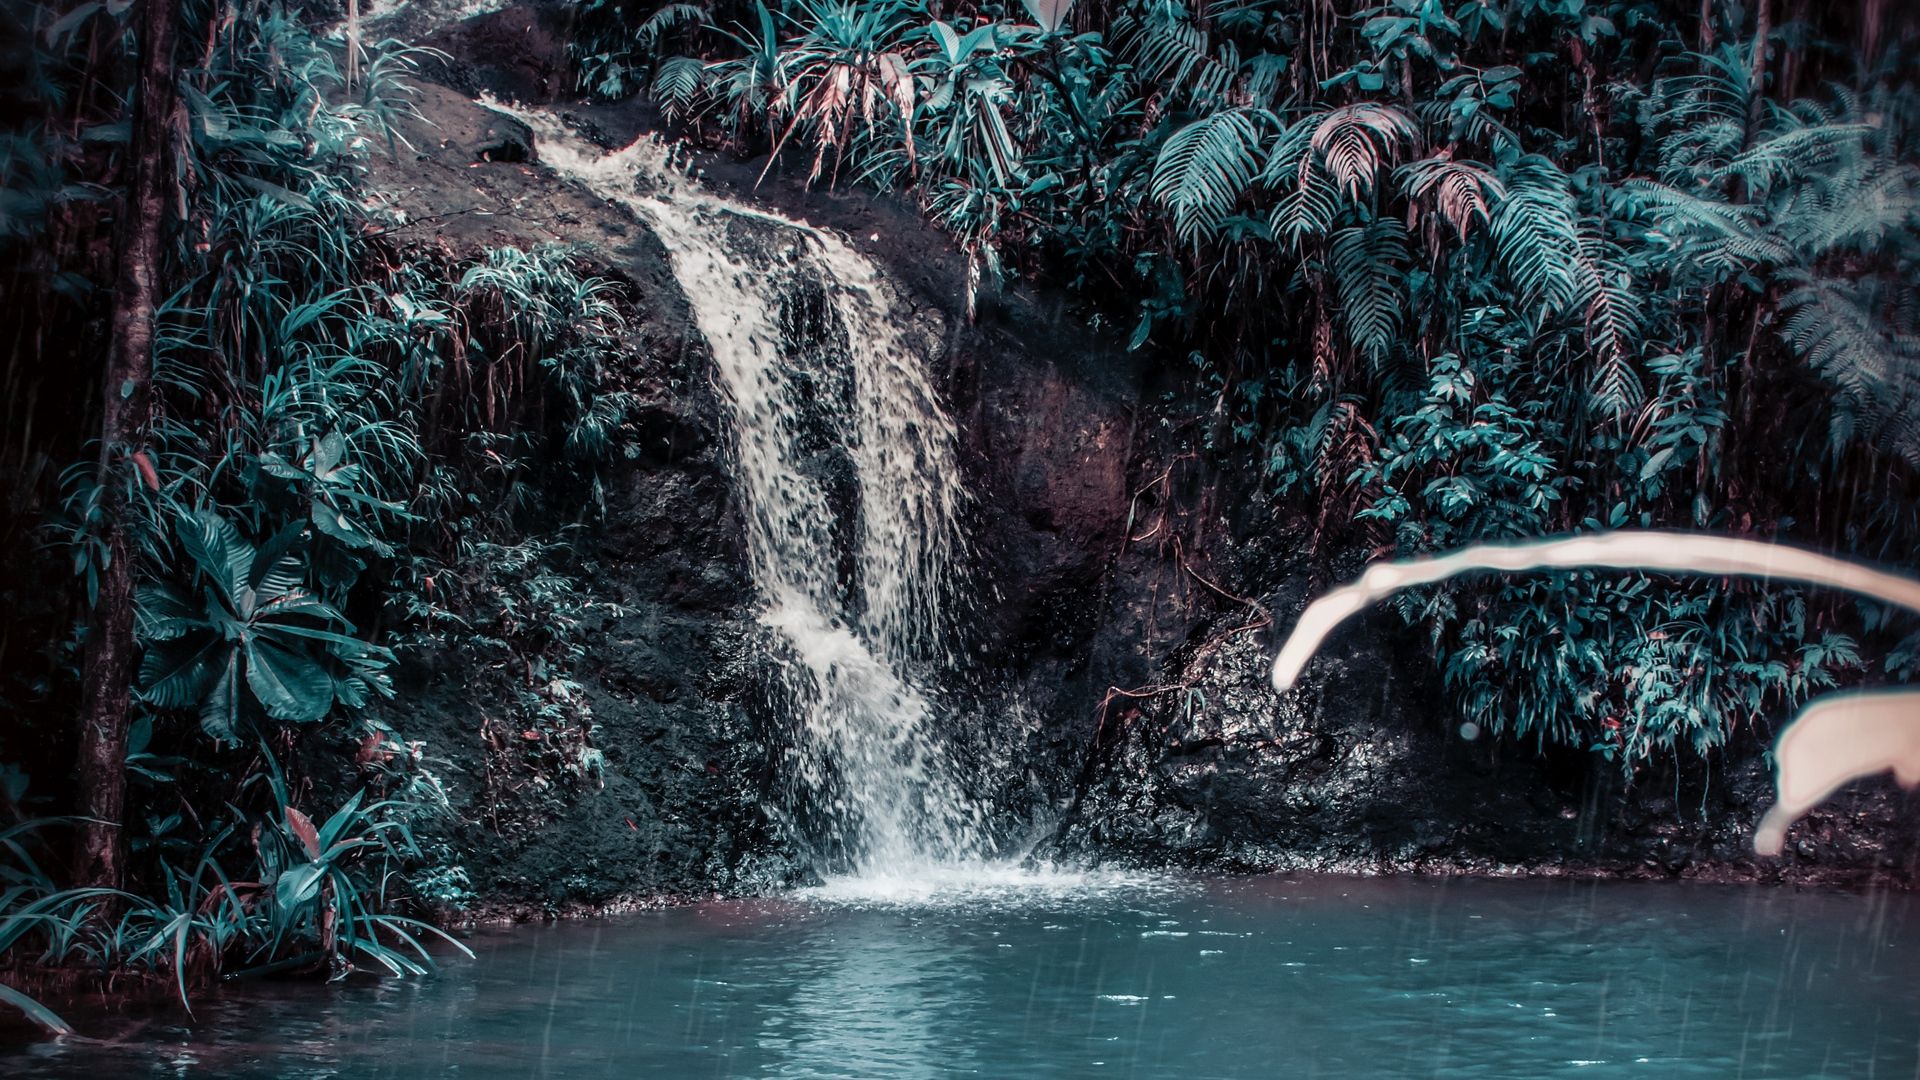 Download wallpaper 1920x1080 waterfall, stream, forest, jungle